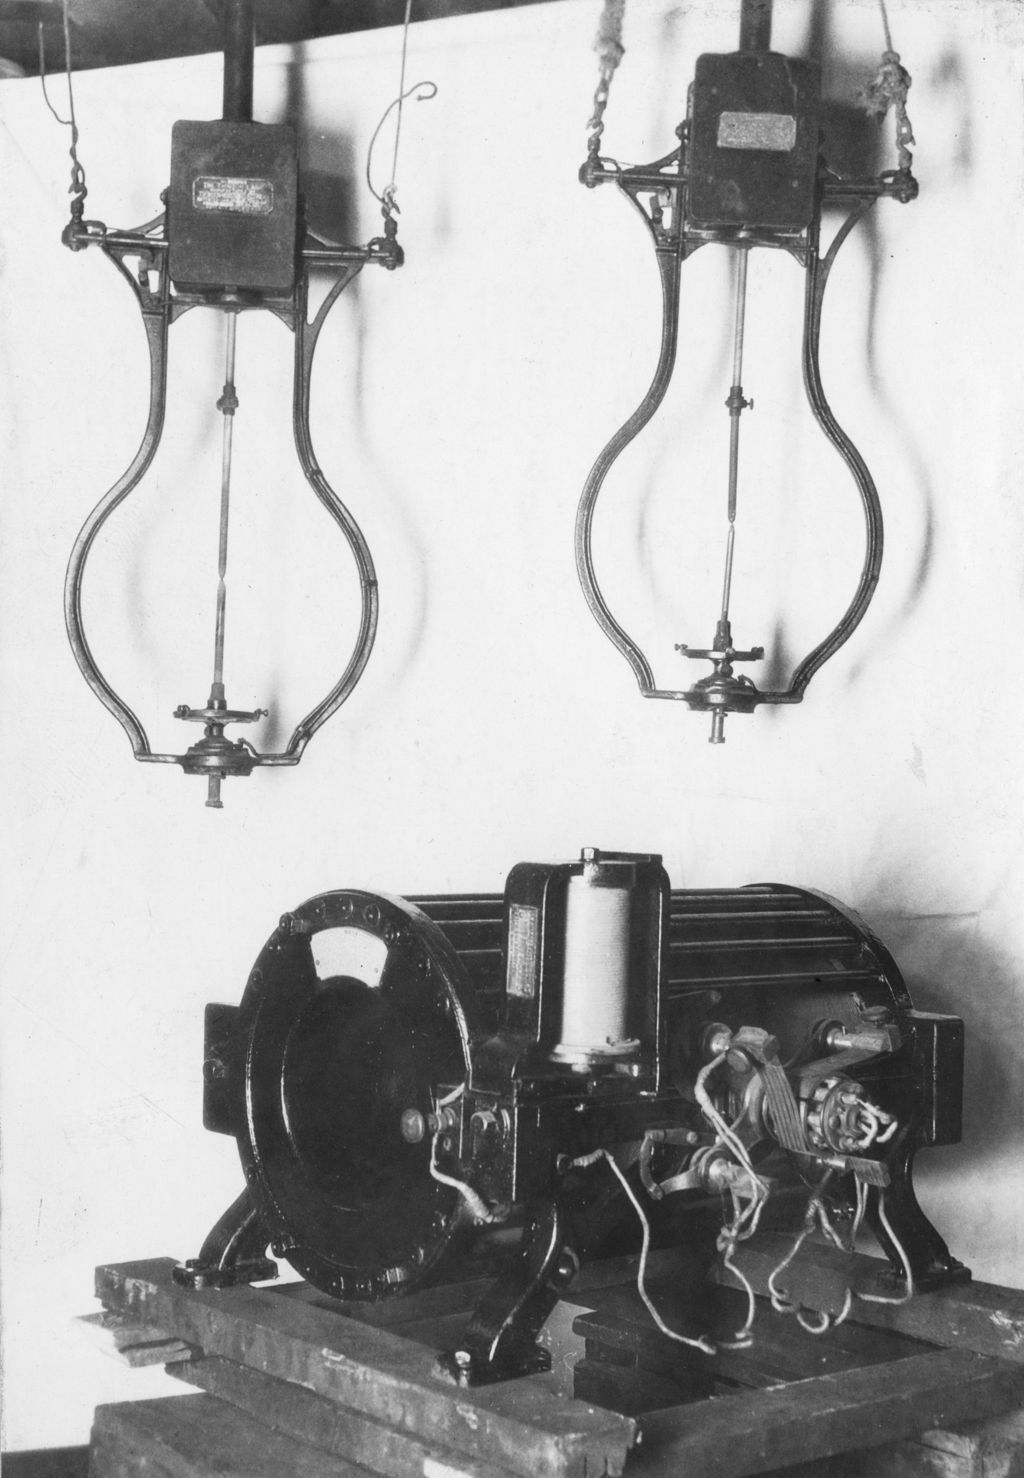 Miniature of Arc lights and generator